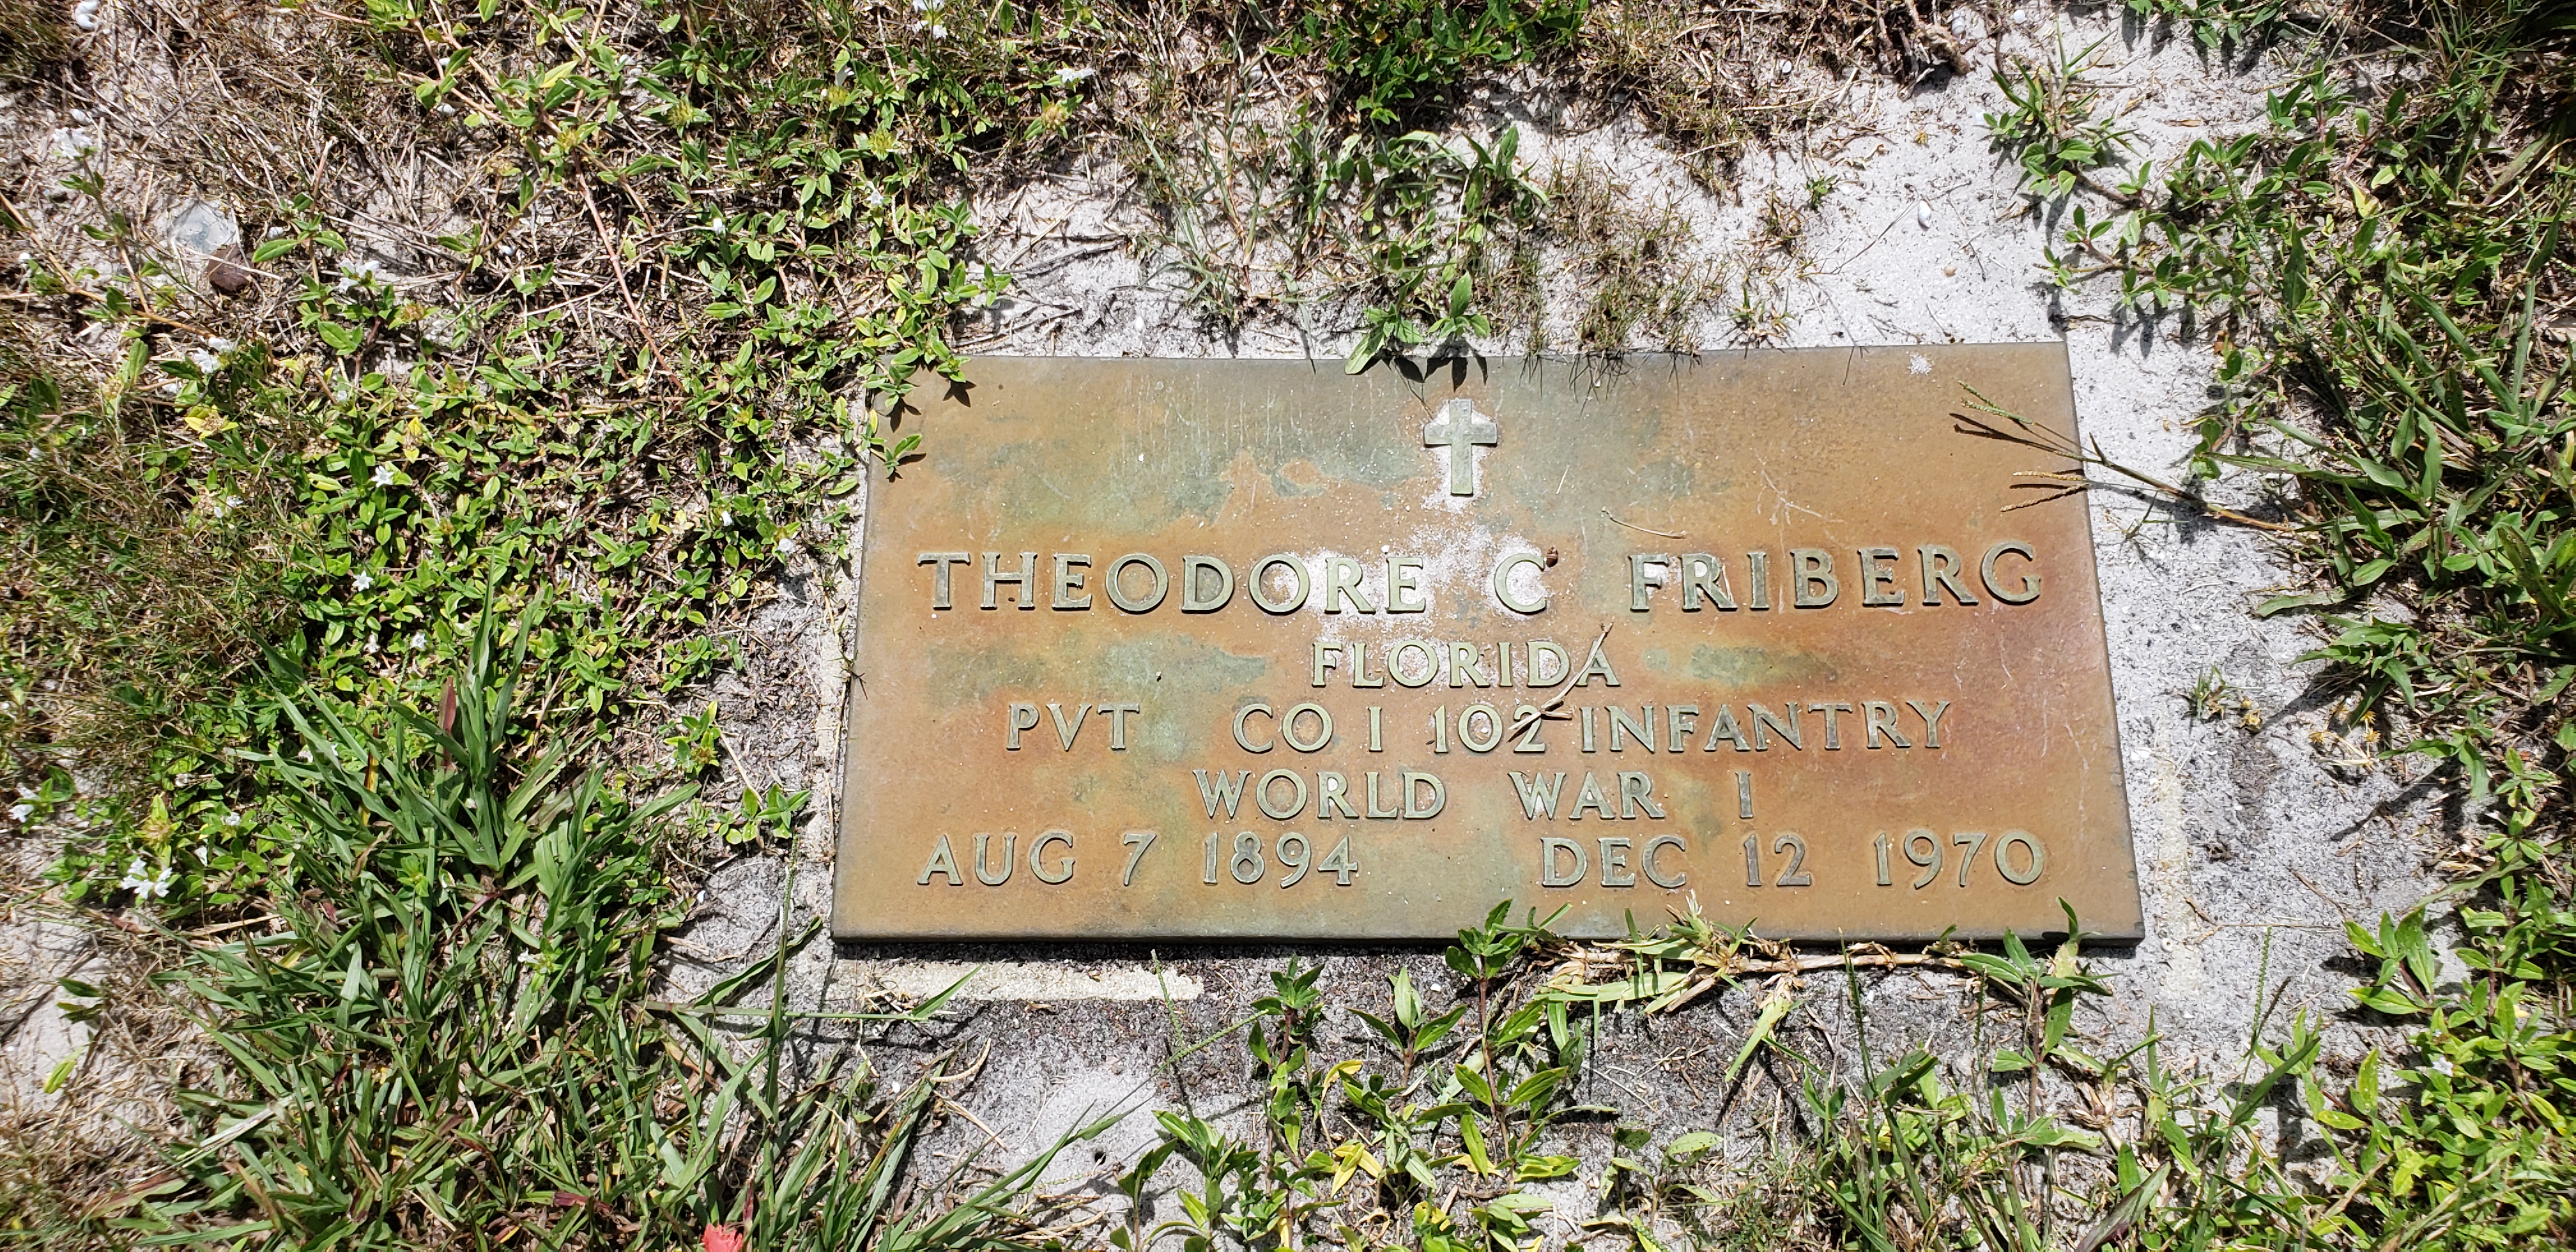 Theodore C Friberg